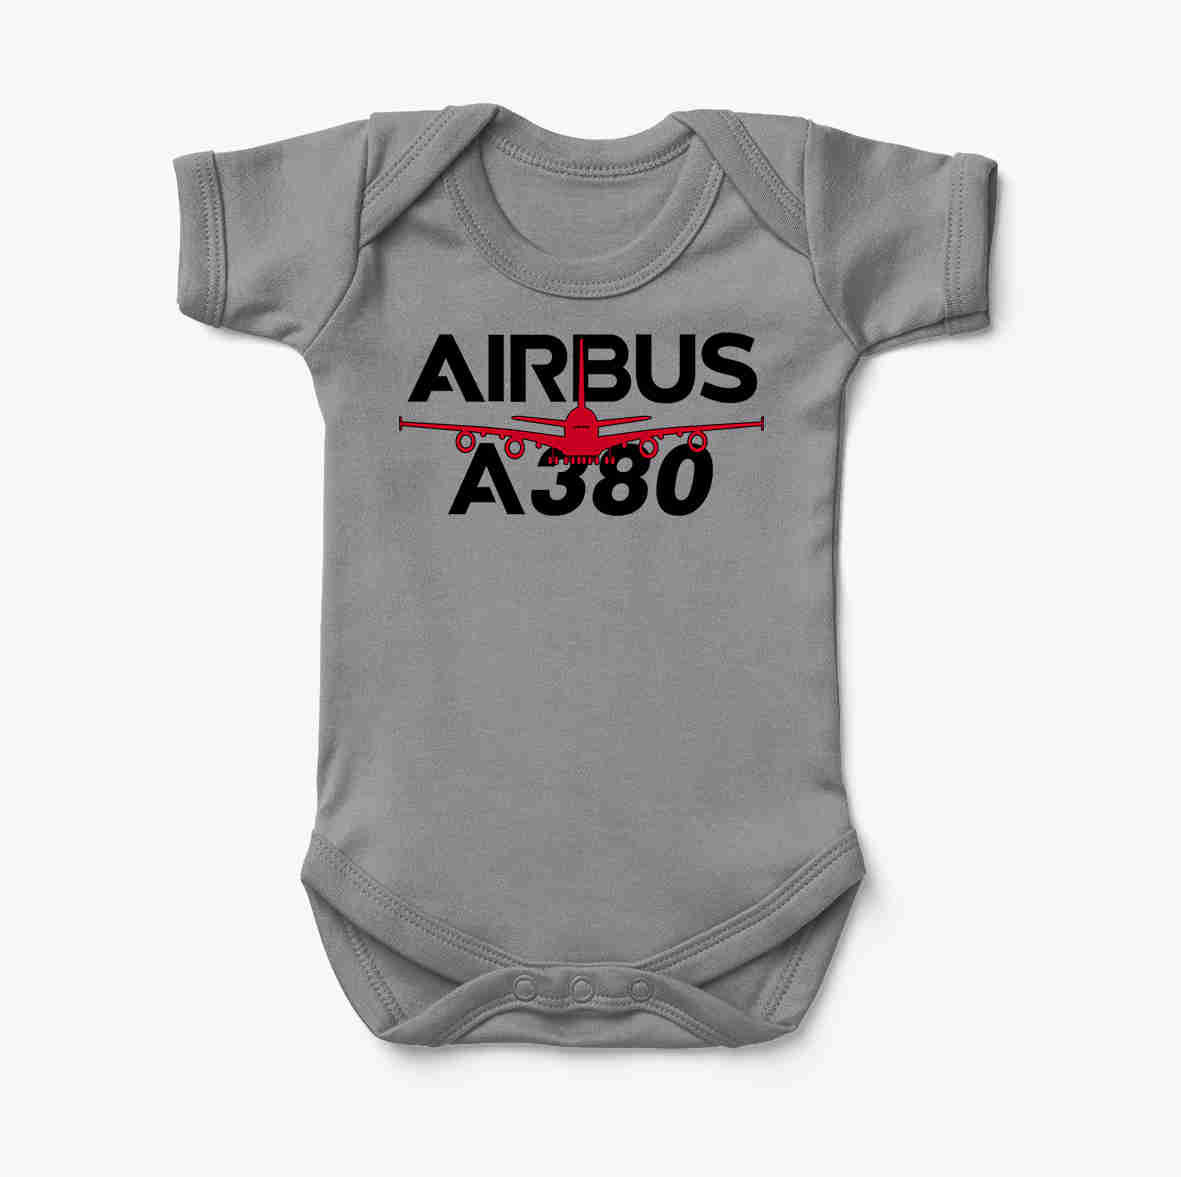 Amazing Airbus A380 Designed Baby Bodysuits